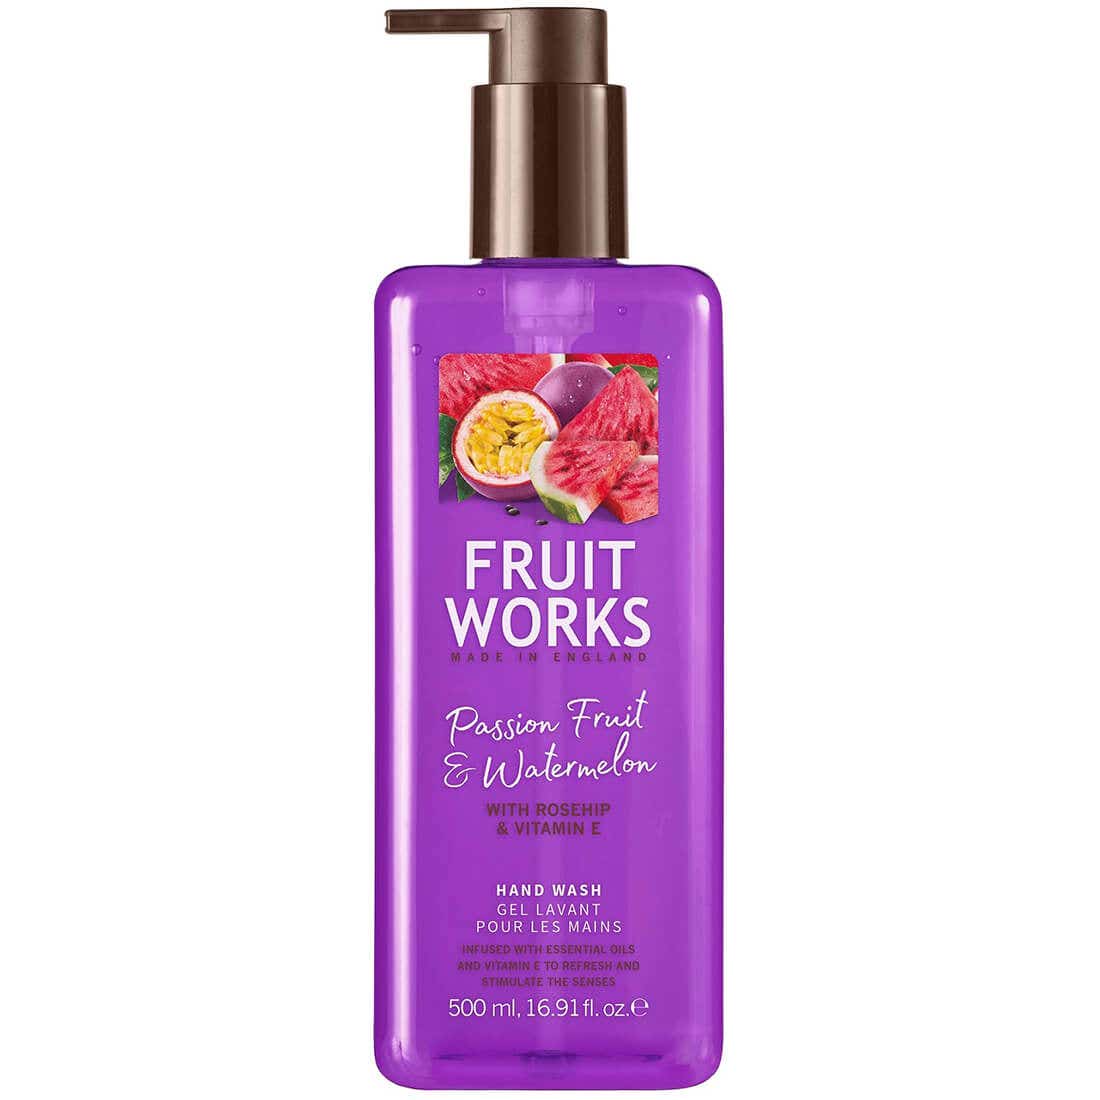 Fruitworks passion fruit liquid hand soap 500ml